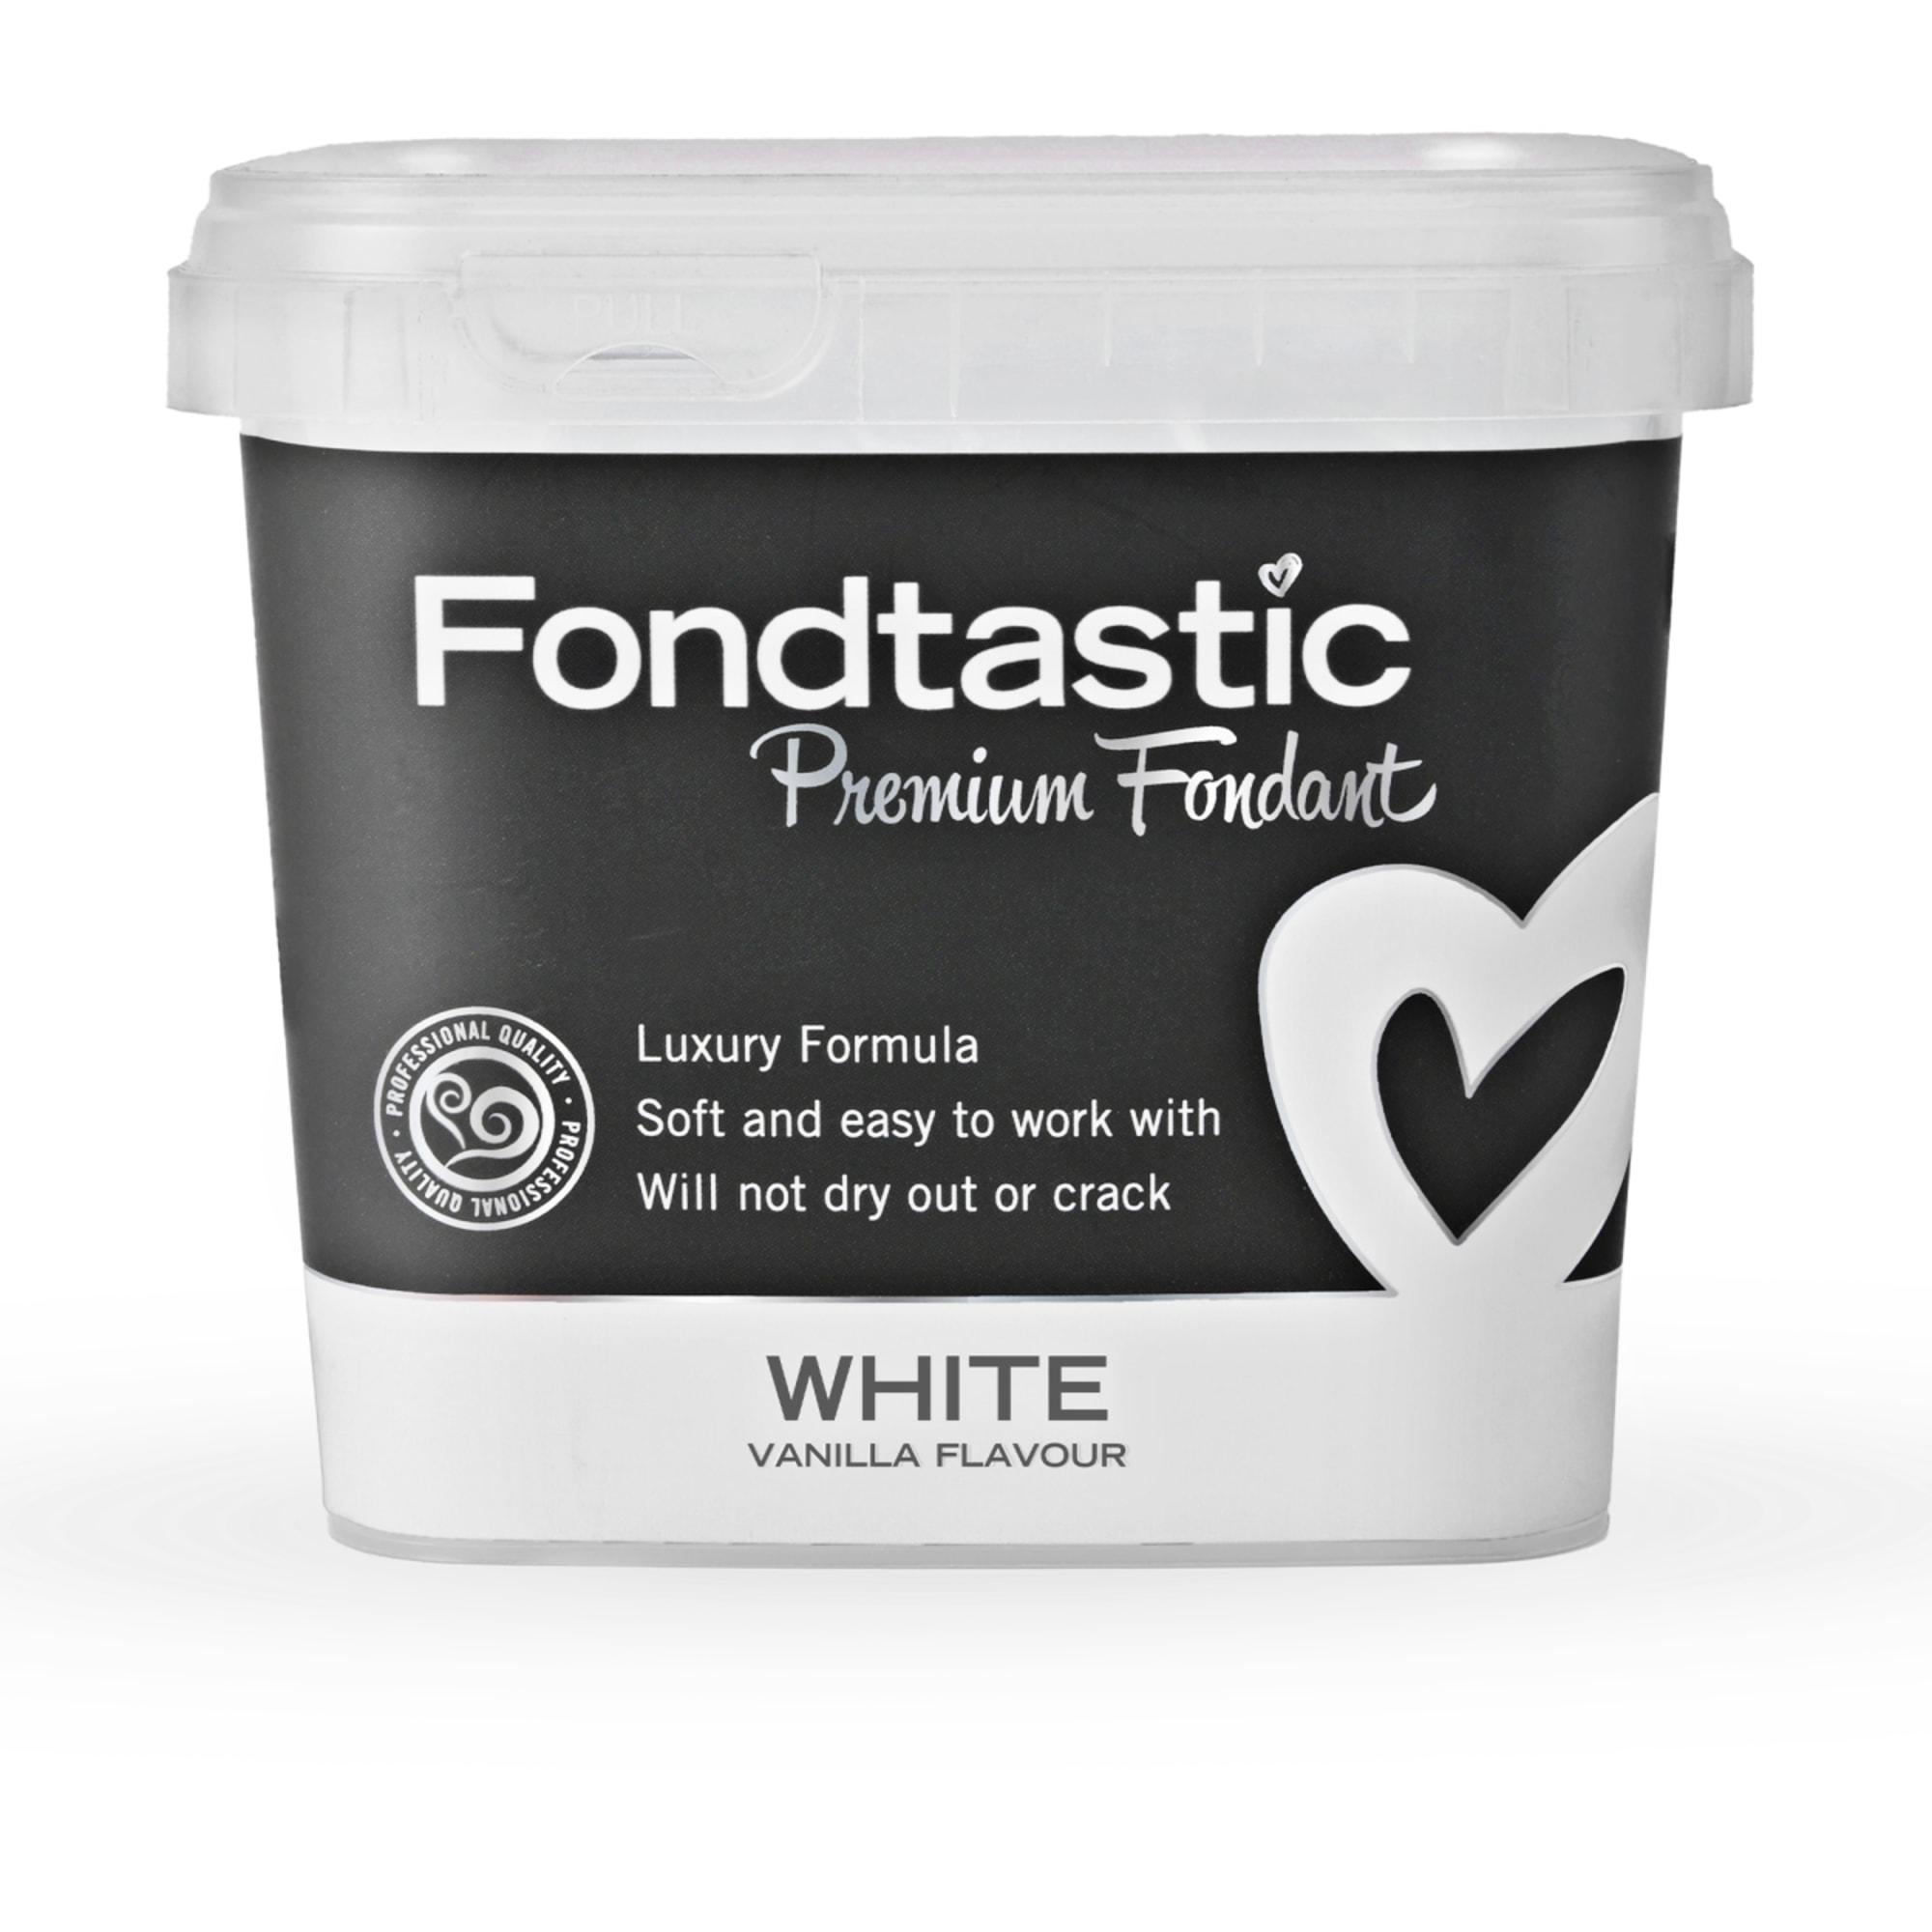 Fondtastic Premium Fondant White 1kg Image 1